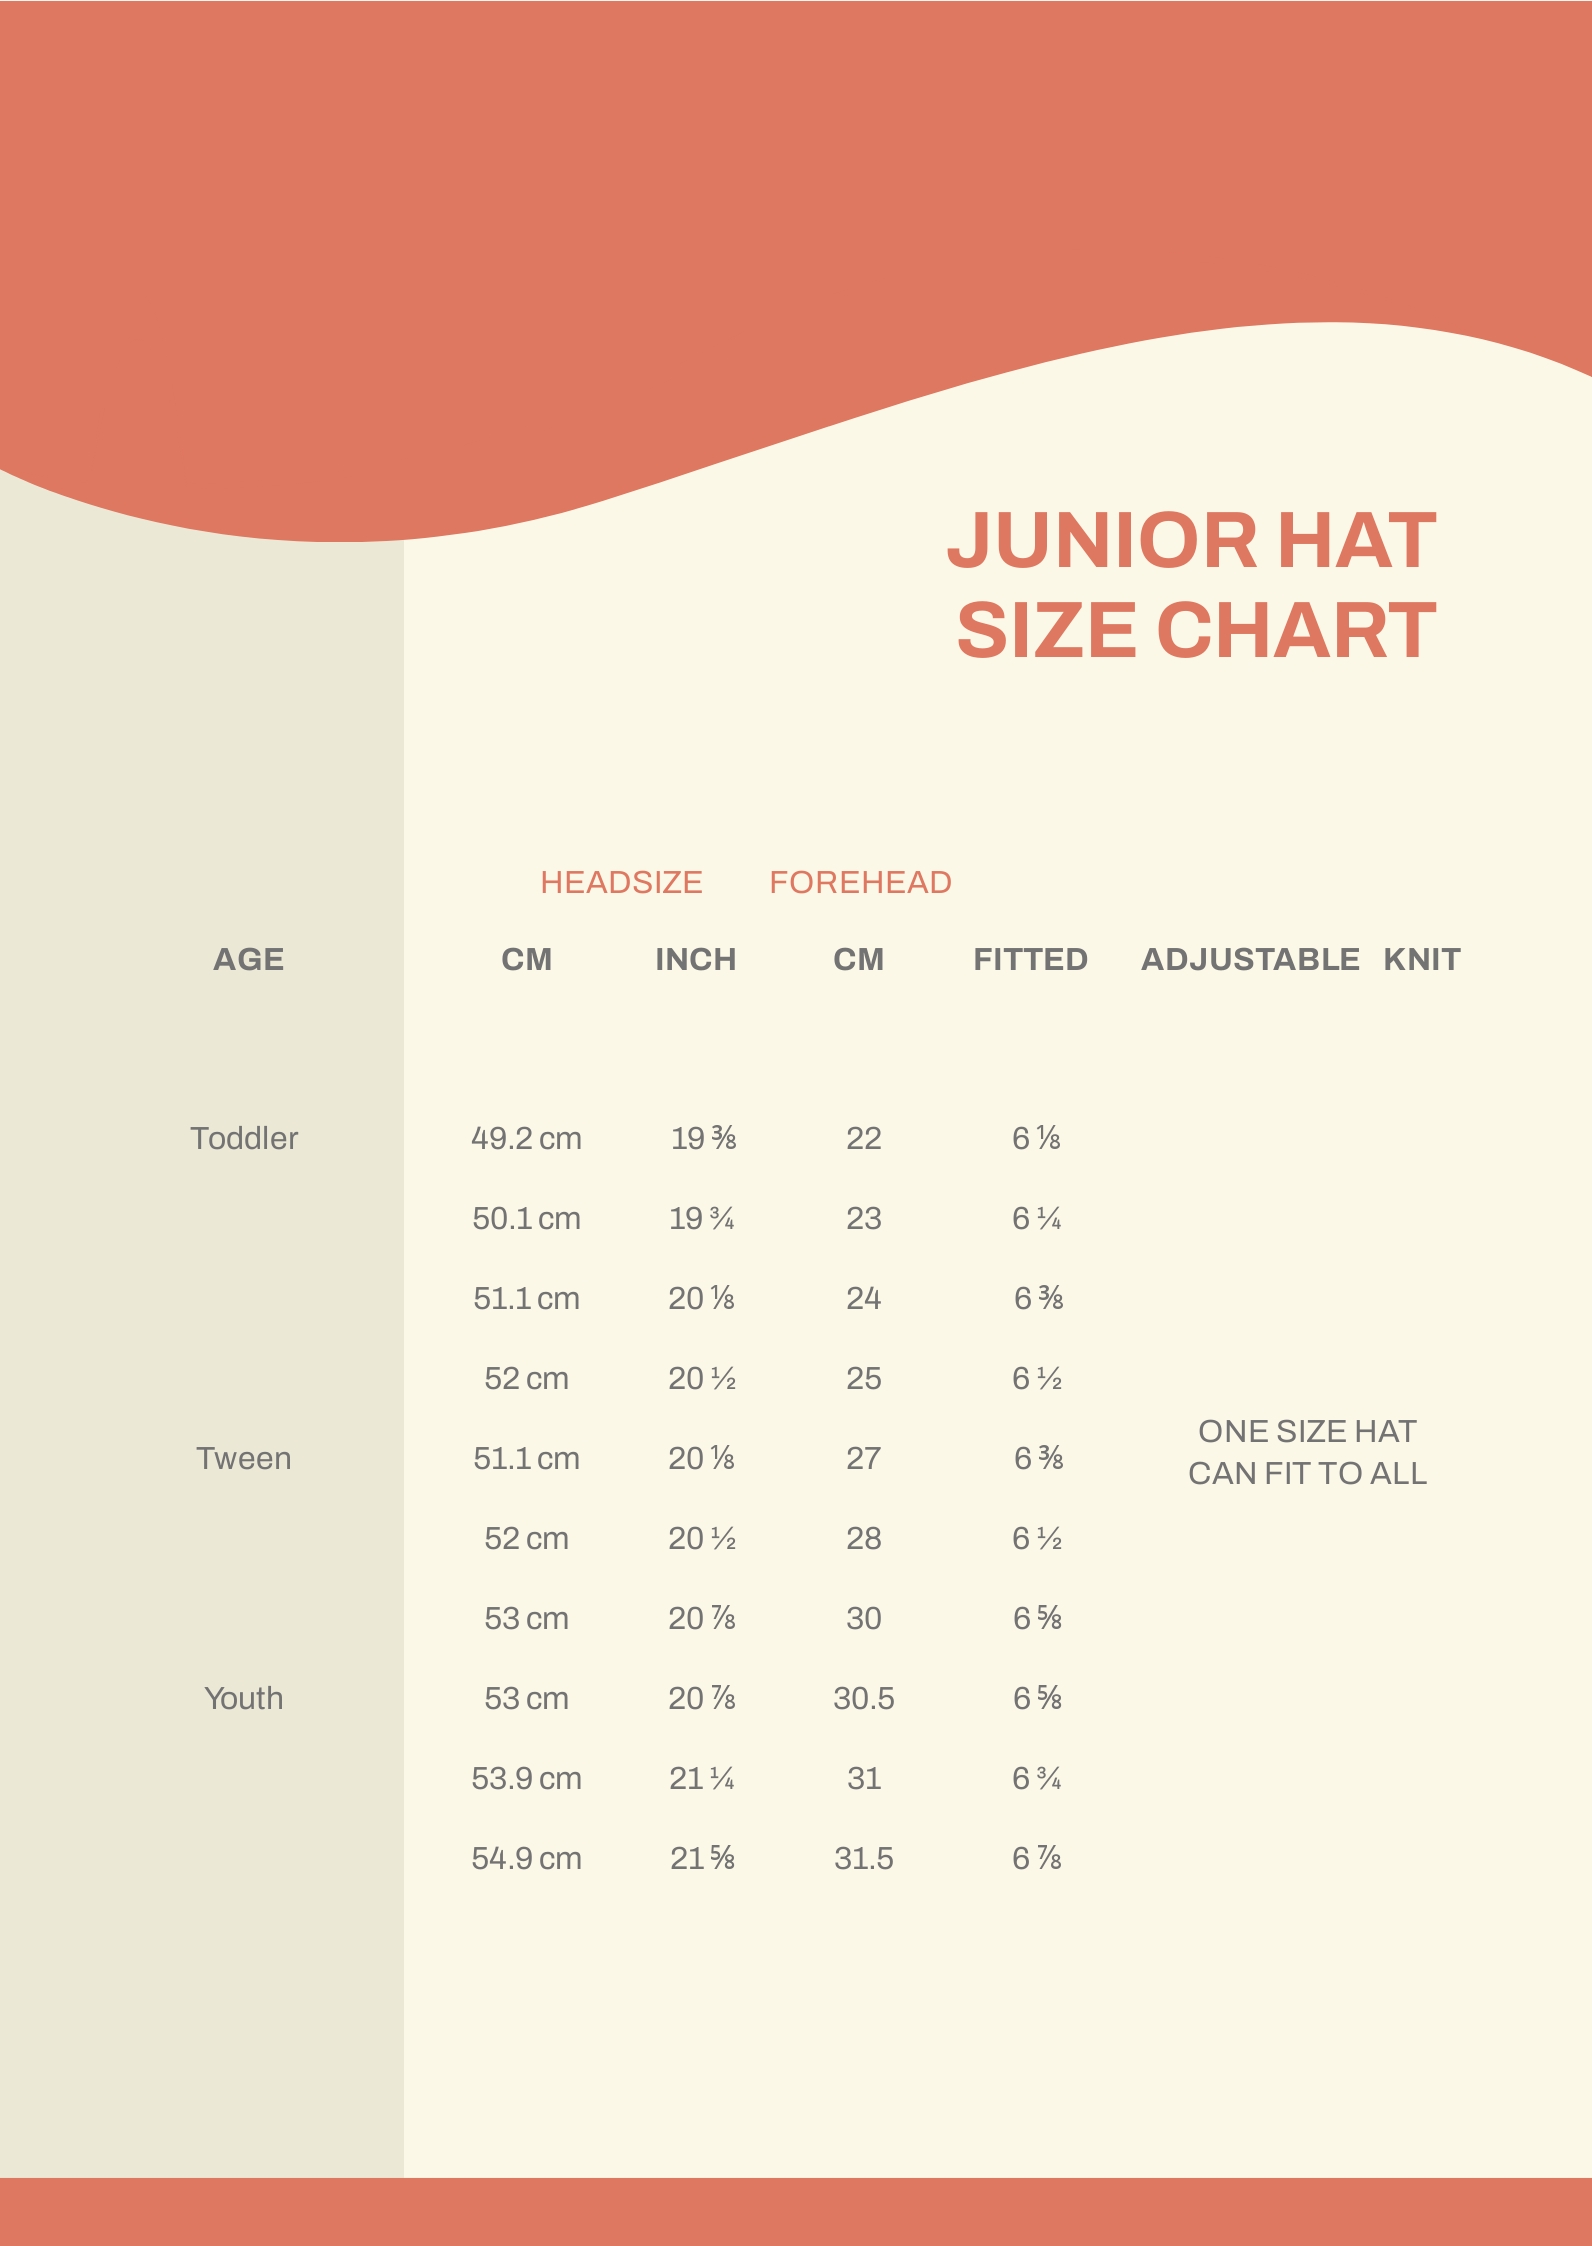 Free New Era Hat Size Chart - Download in PDF